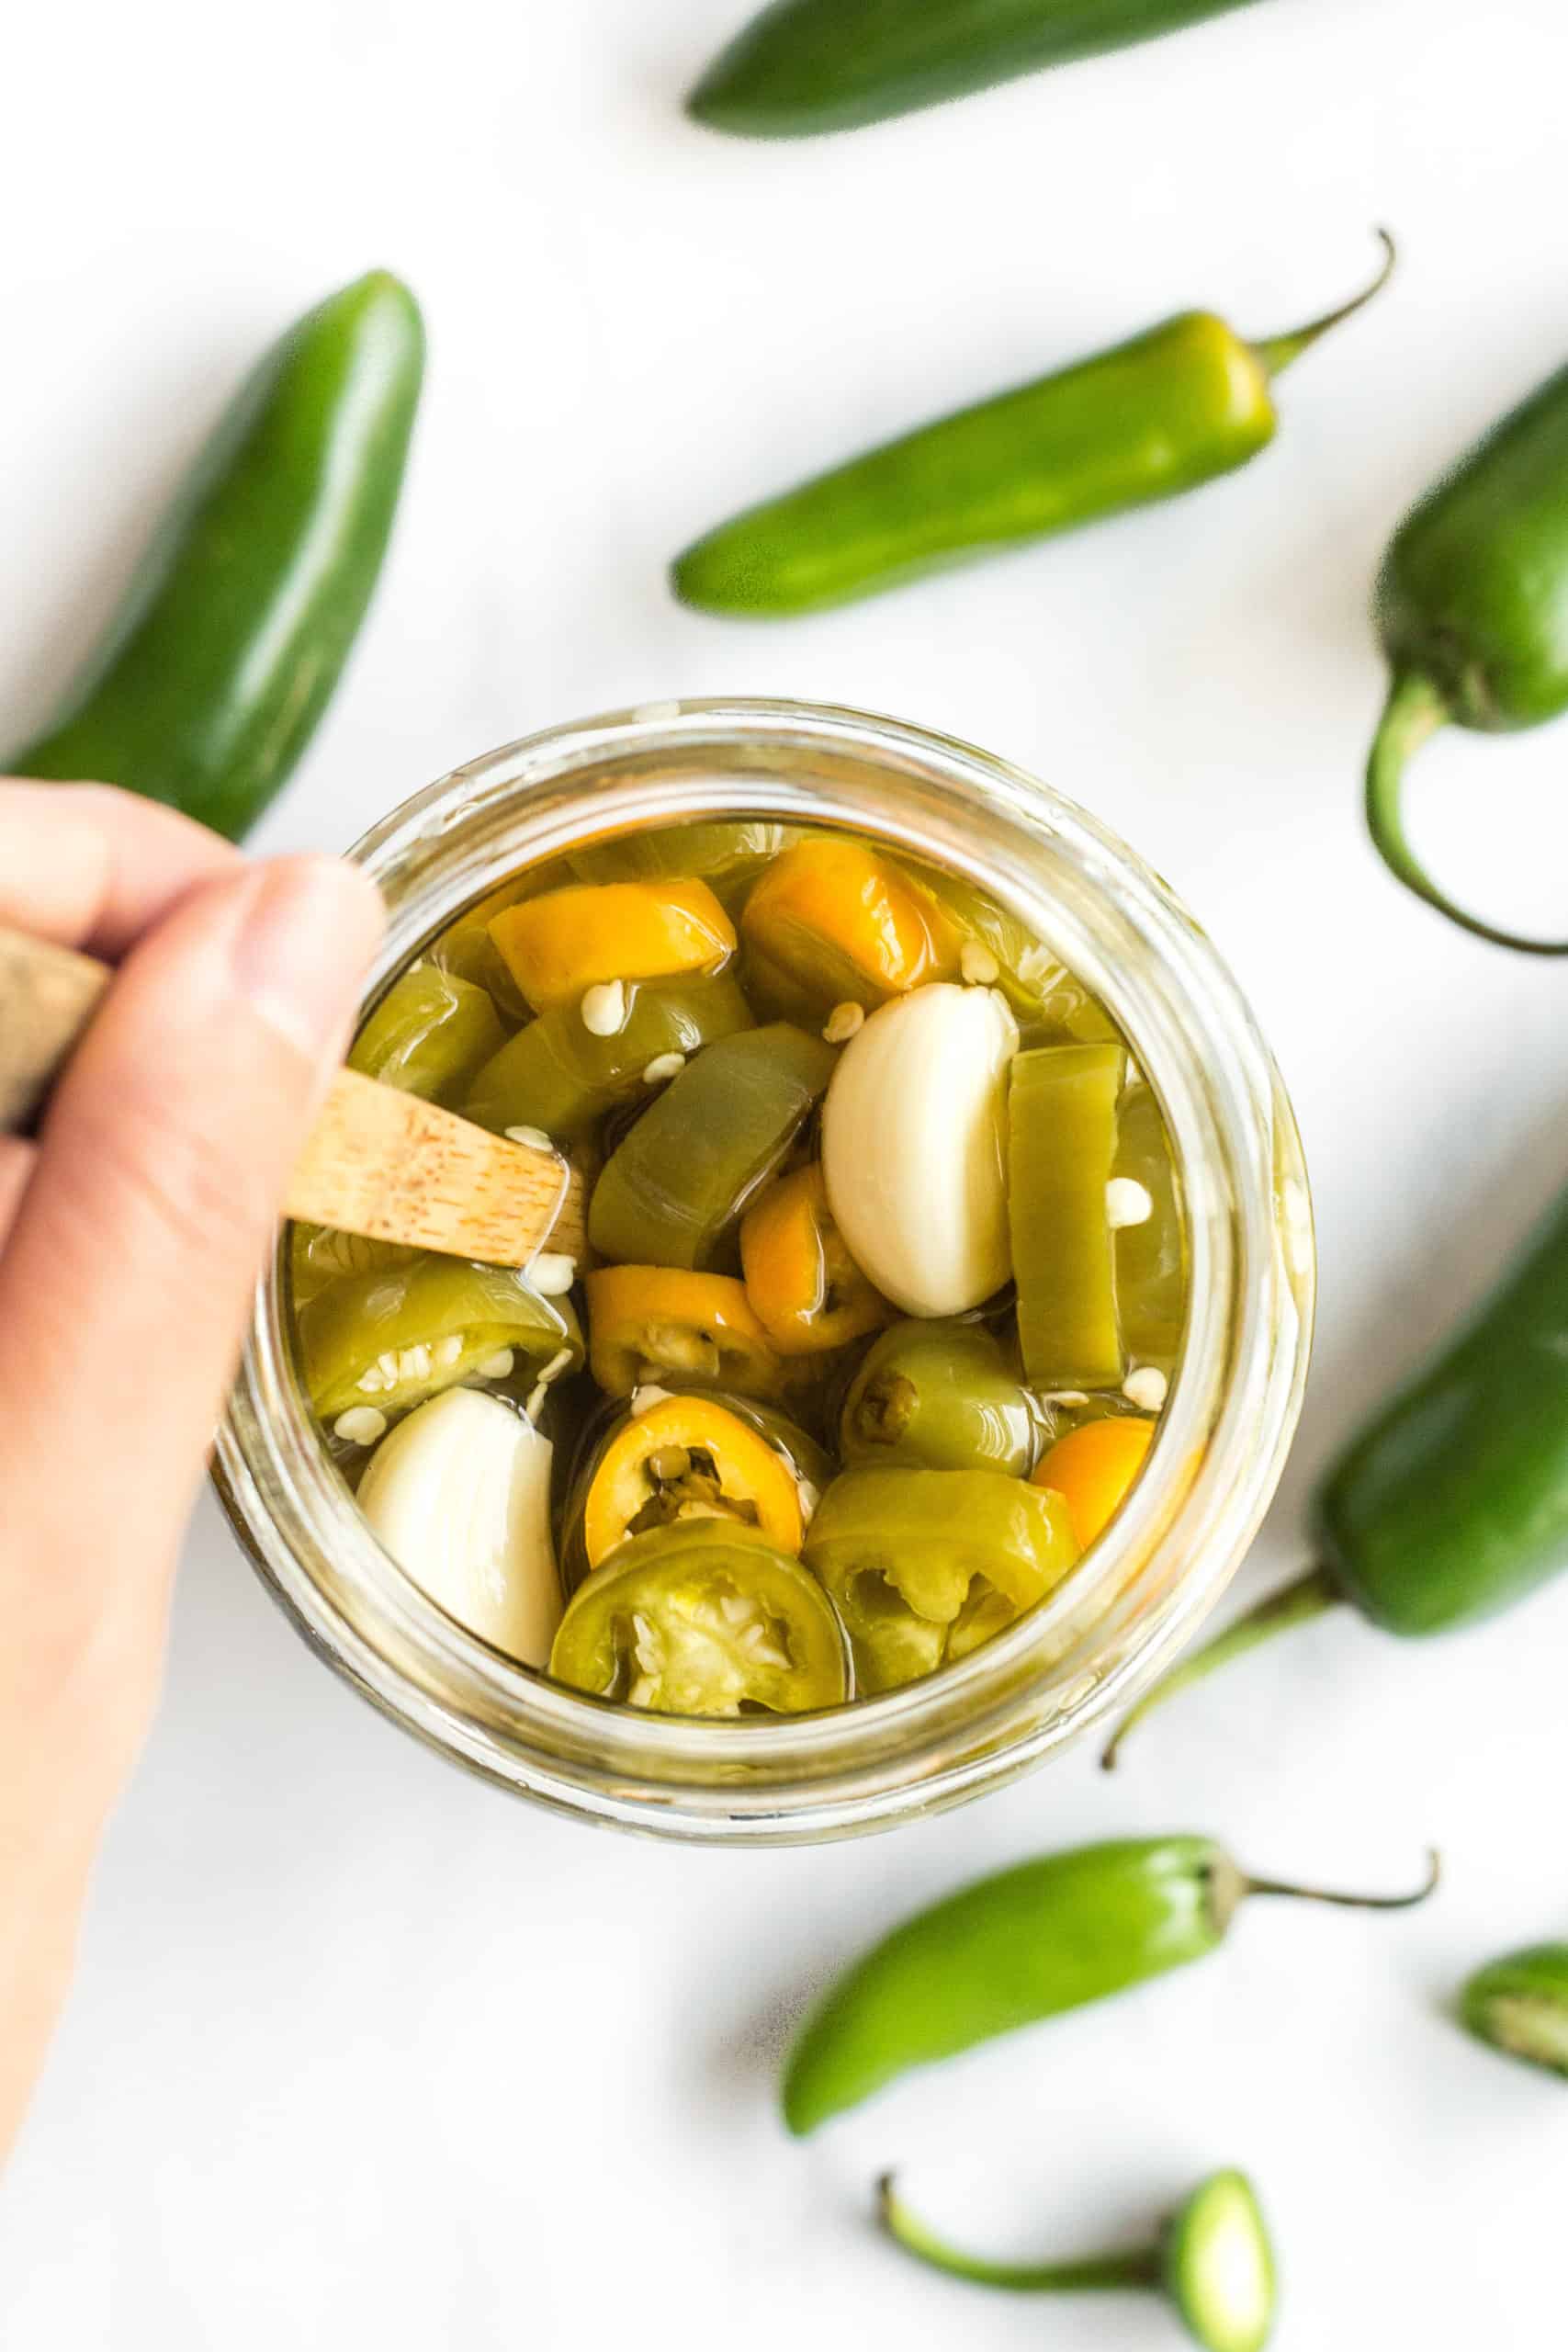 Hand stirring a jar of pickled jalapeño peppers.